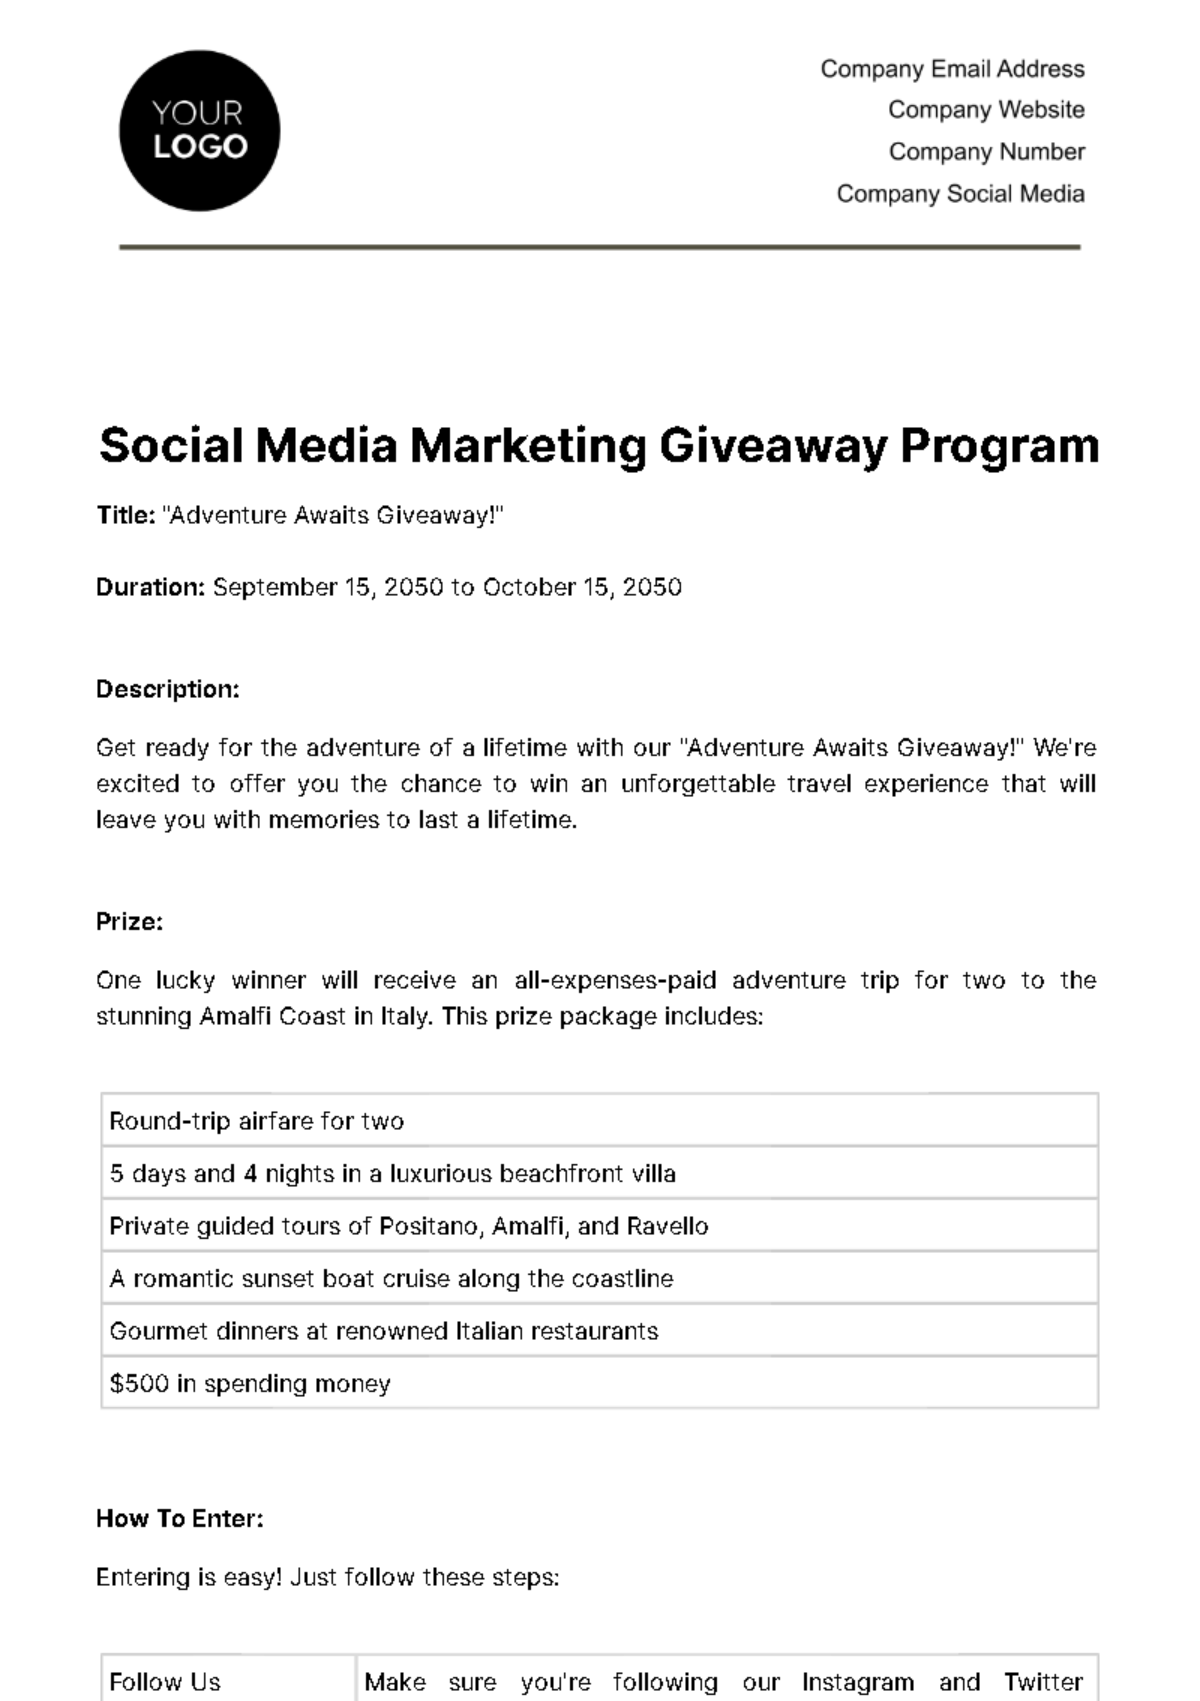 Free Social Media Marketing Giveaway Program Template